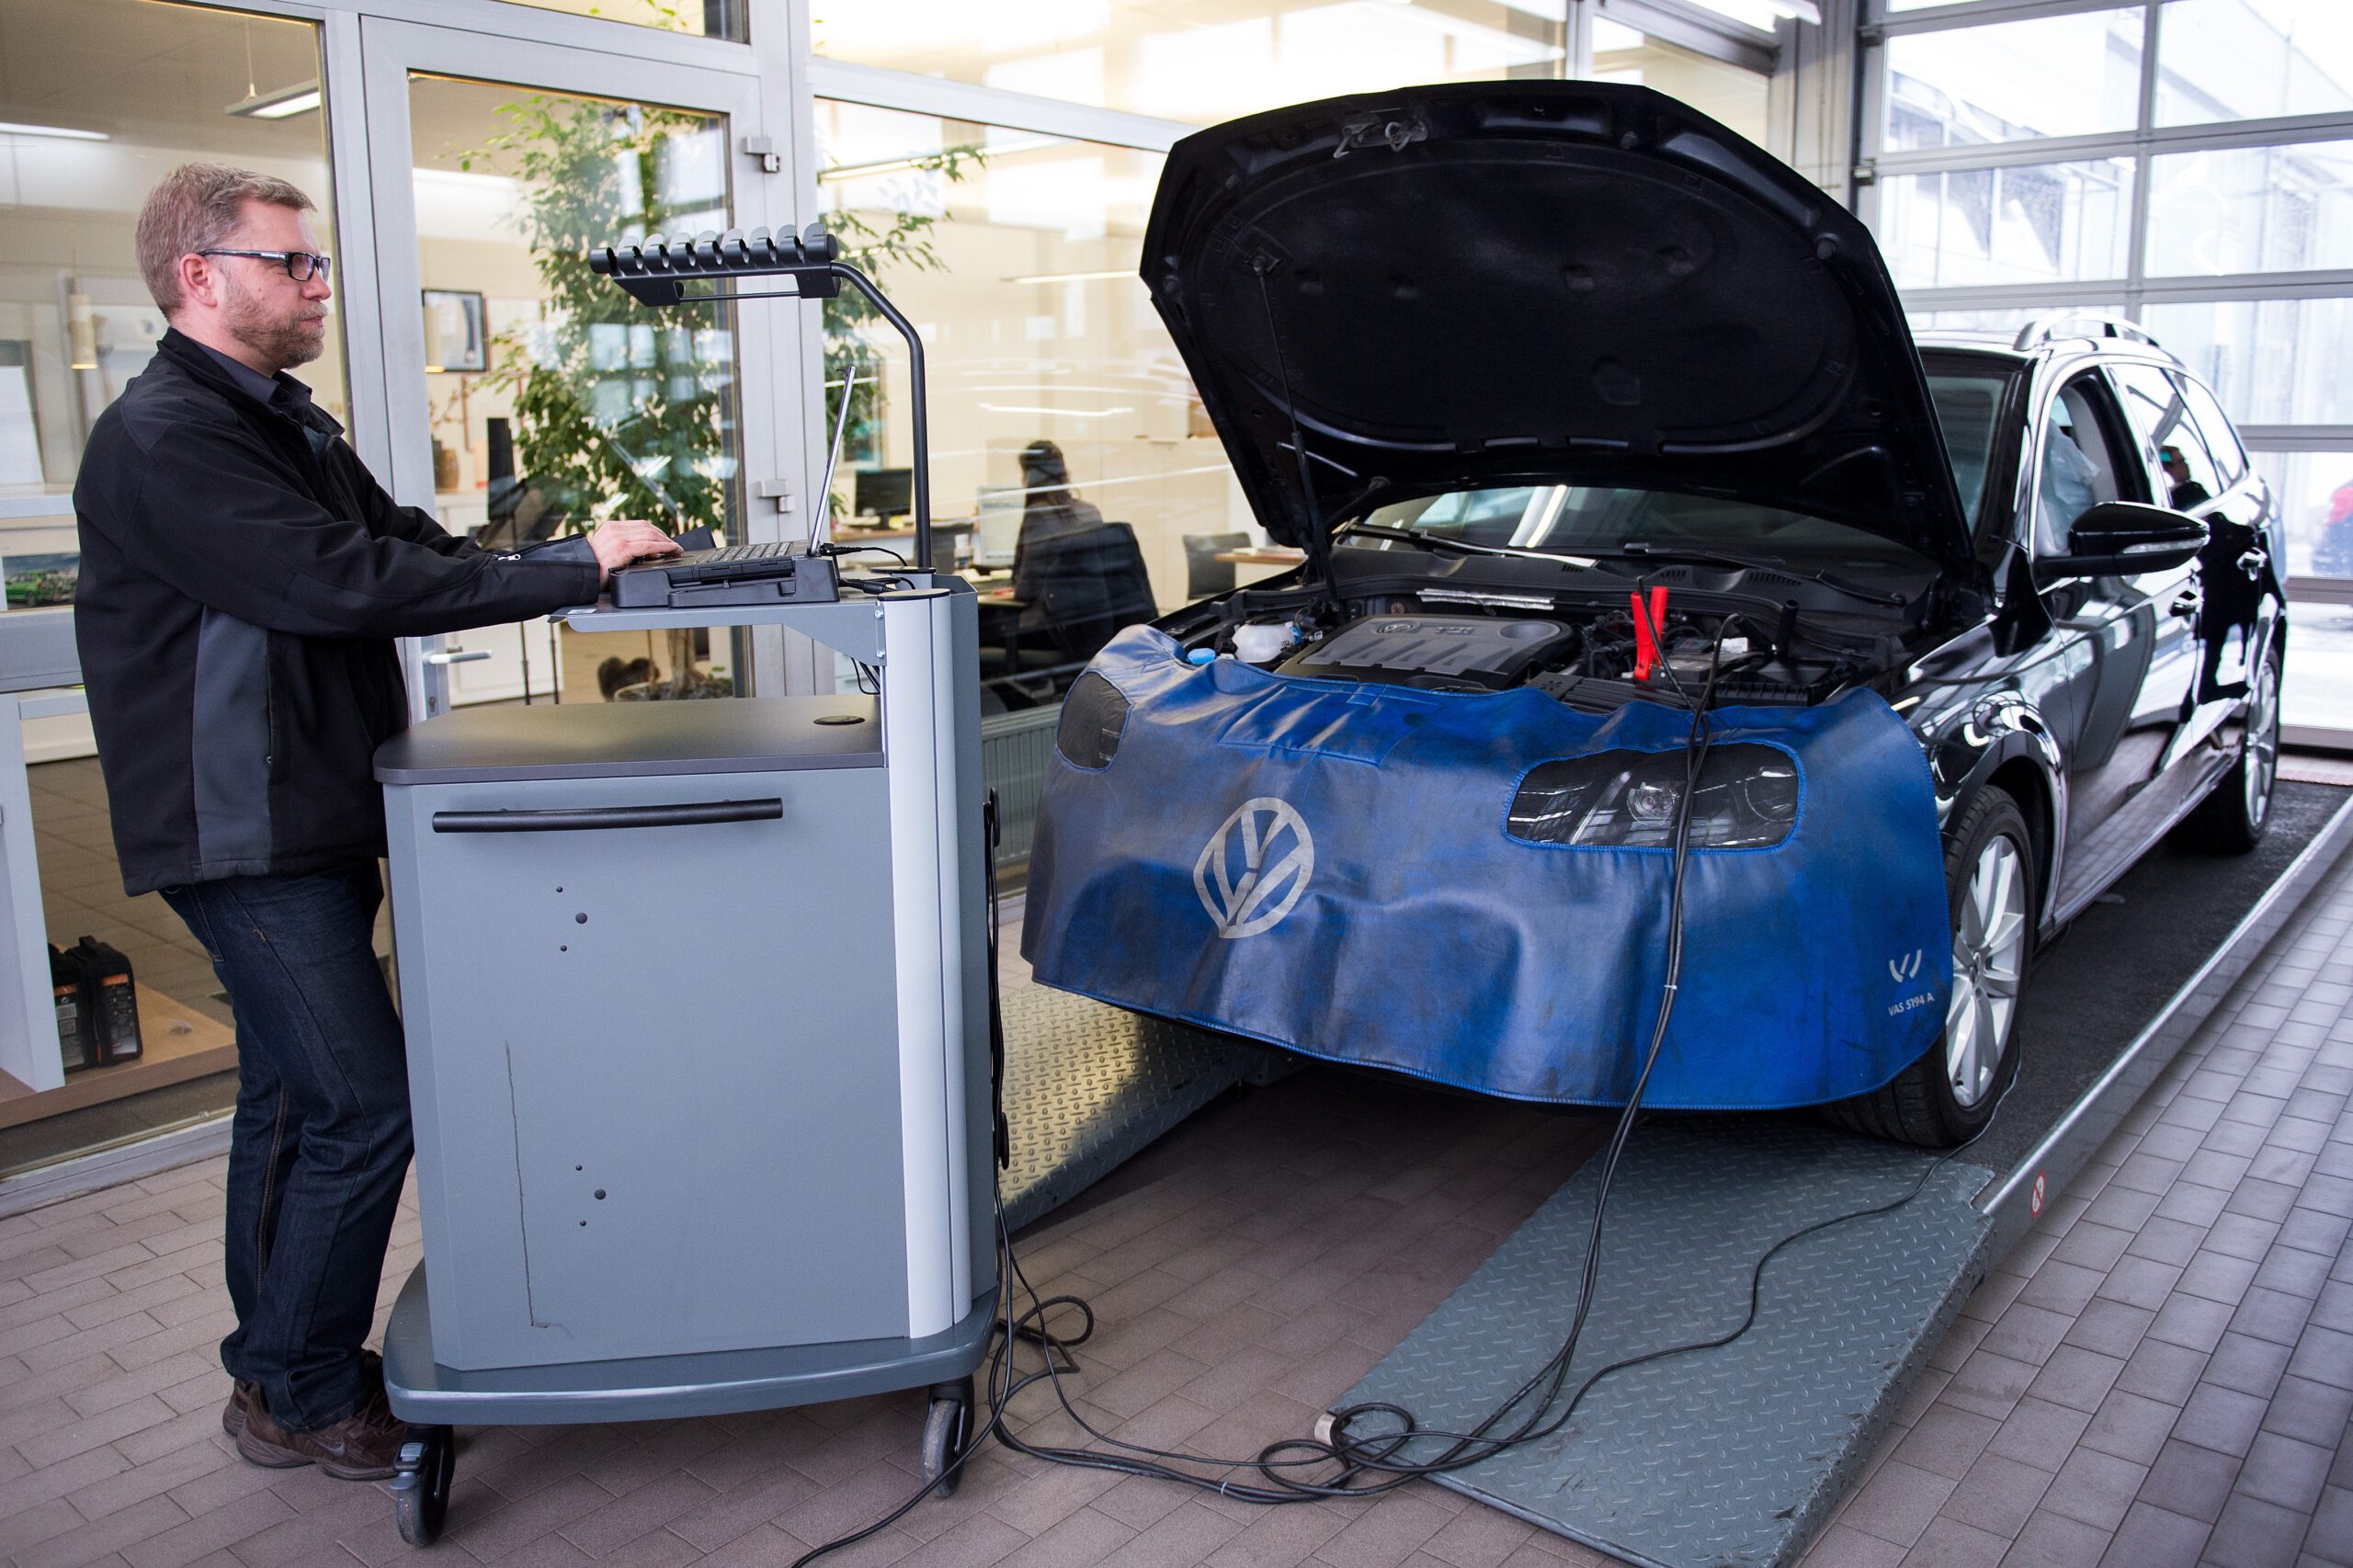 EU ignoring diesel pollution despite Volkswagen scandal – NGO